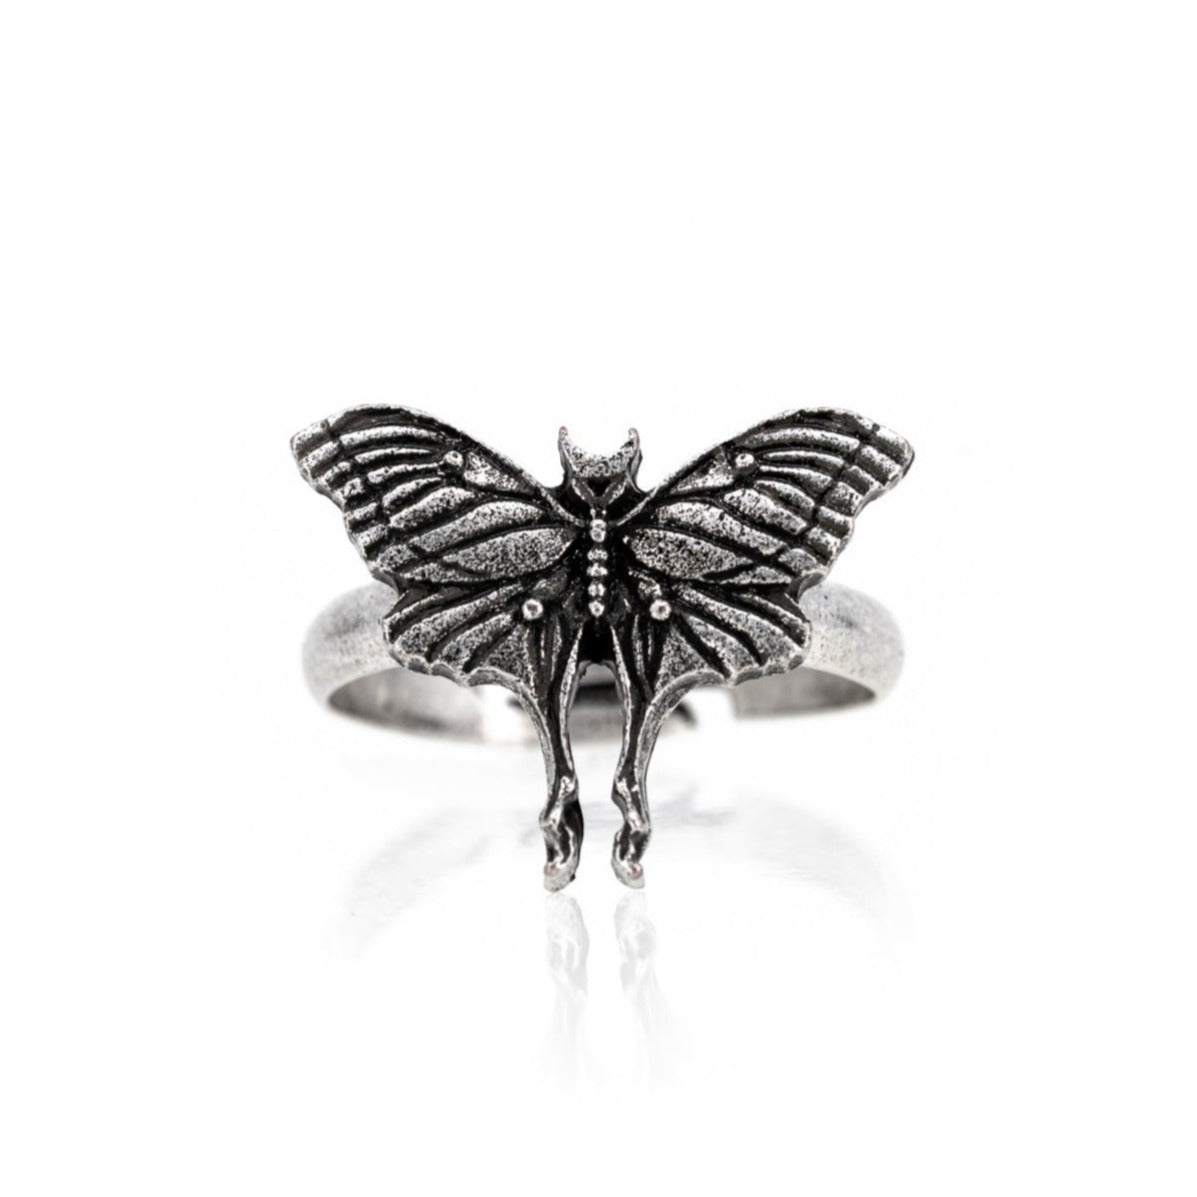 Luna Moth Ring - Black Feather Design